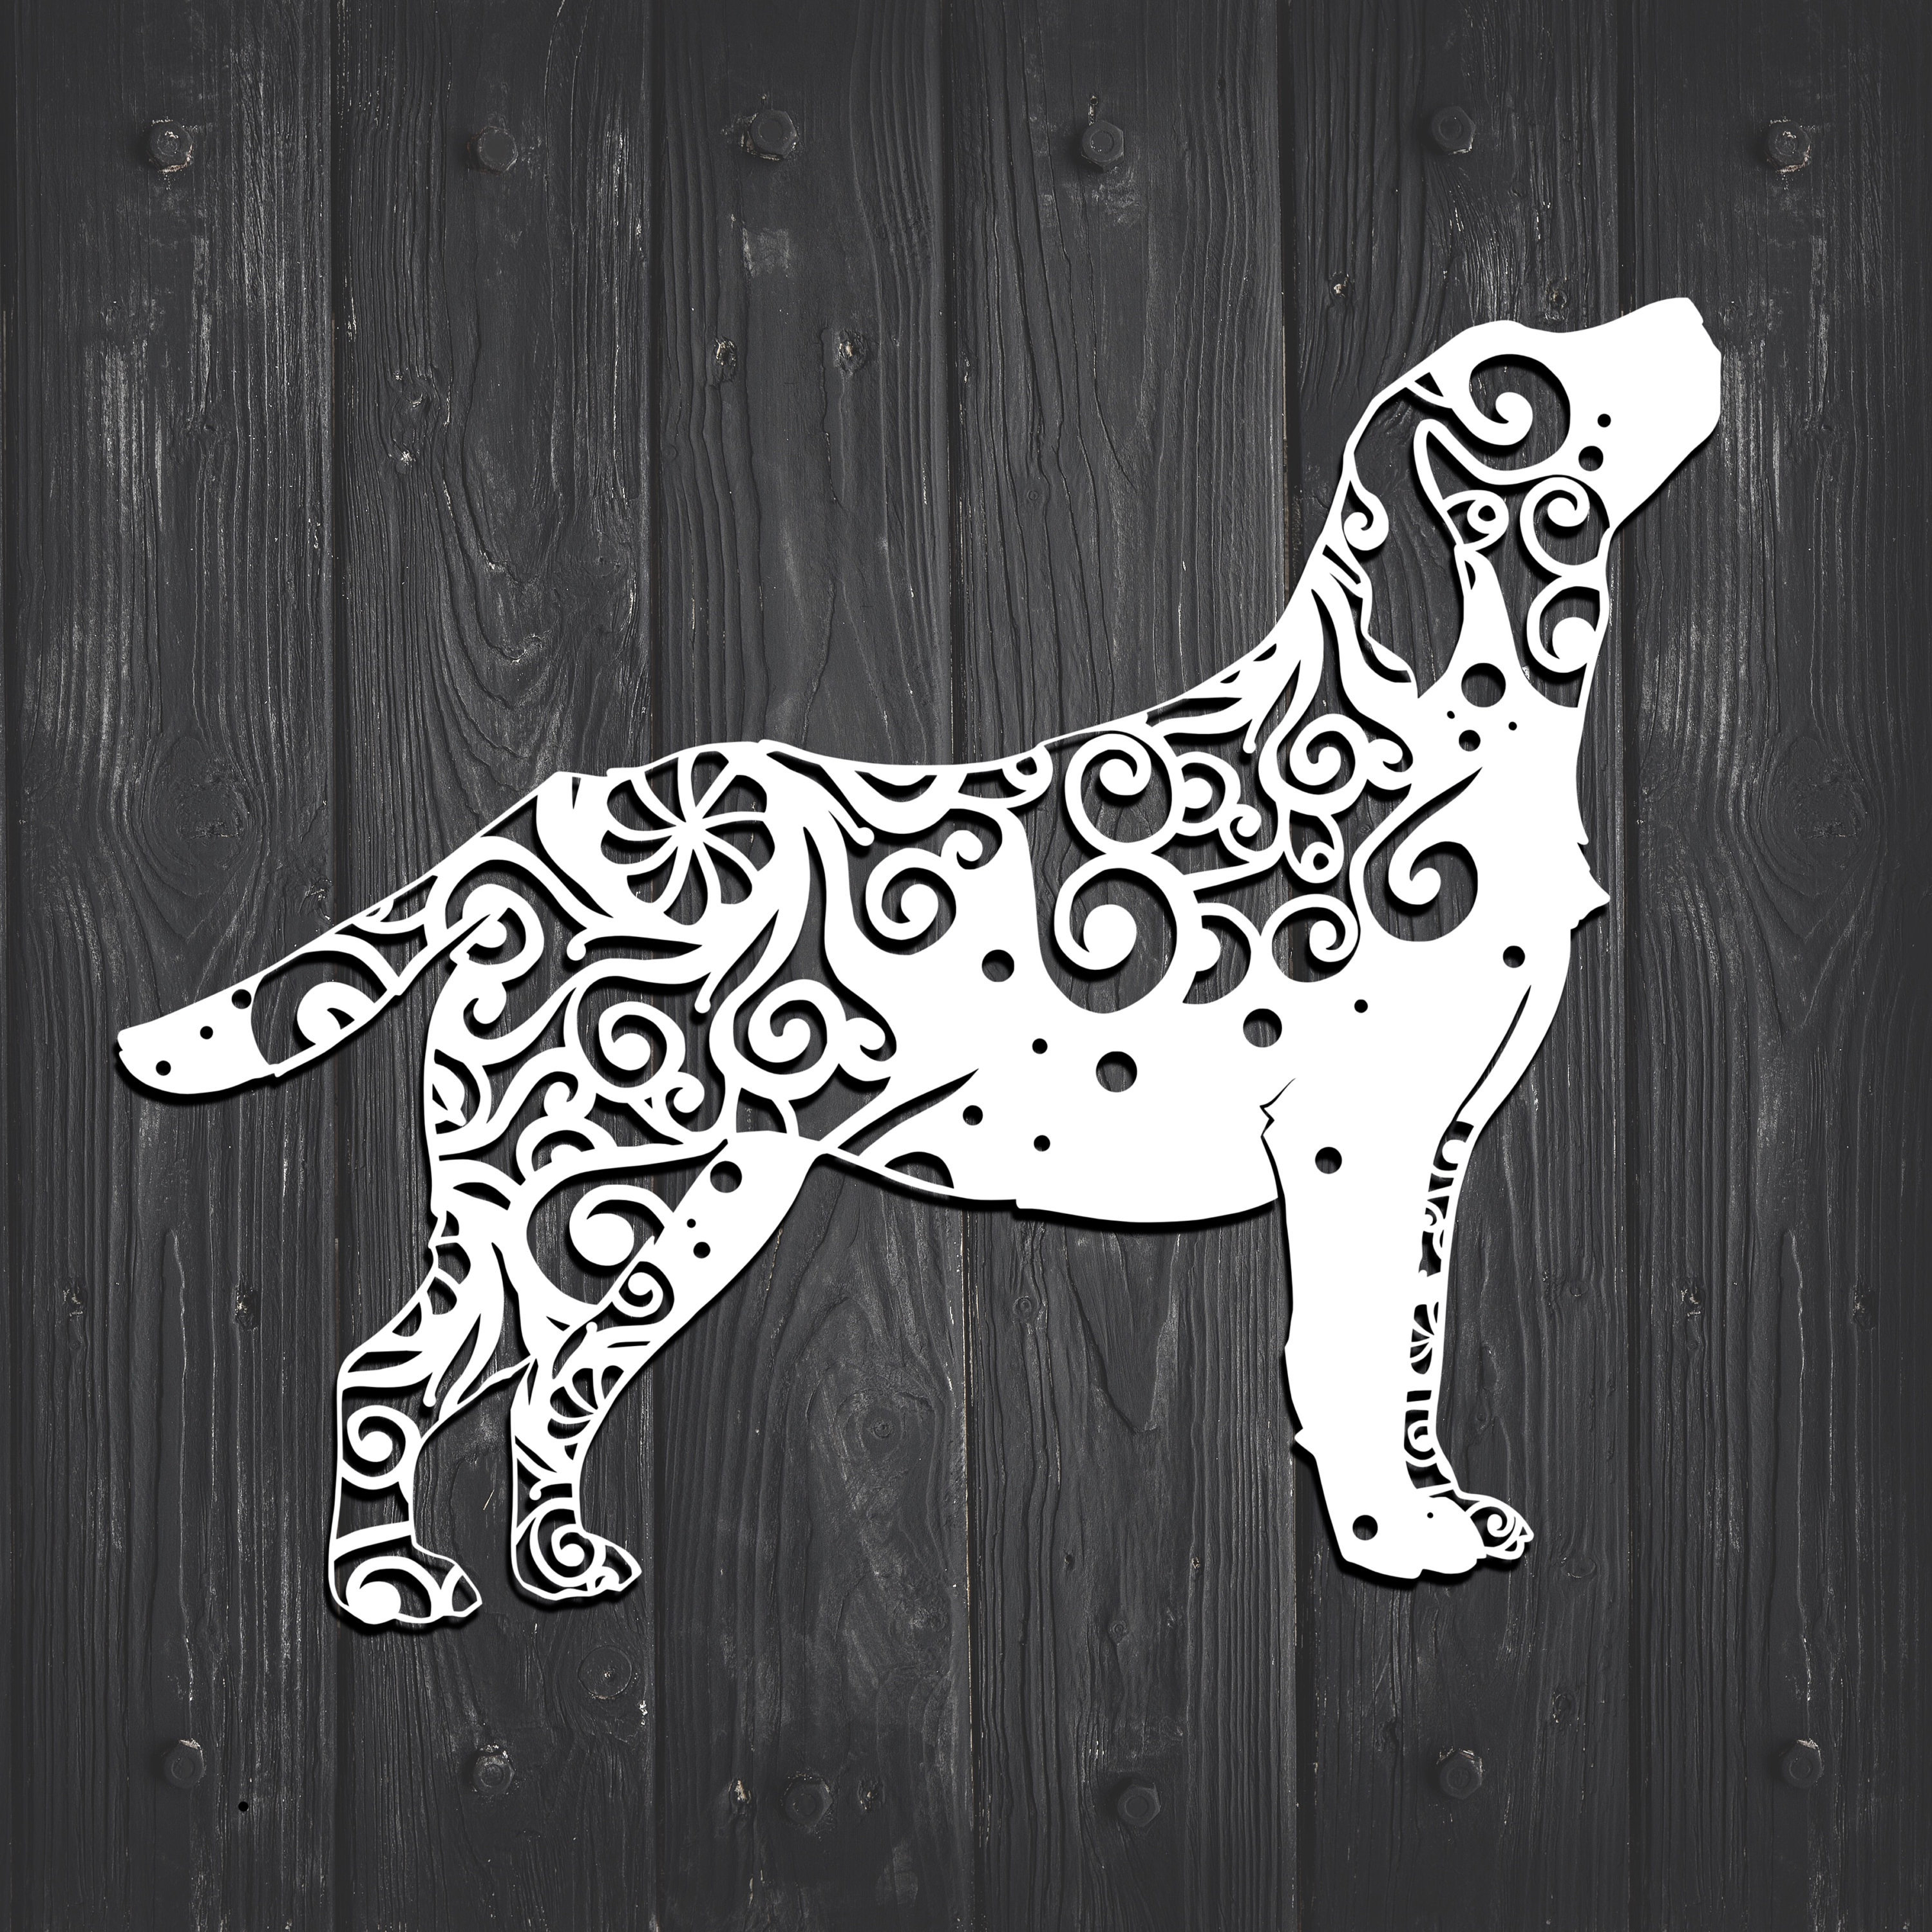 Download Mandala Dog Svg For Cricut - SVG Layered